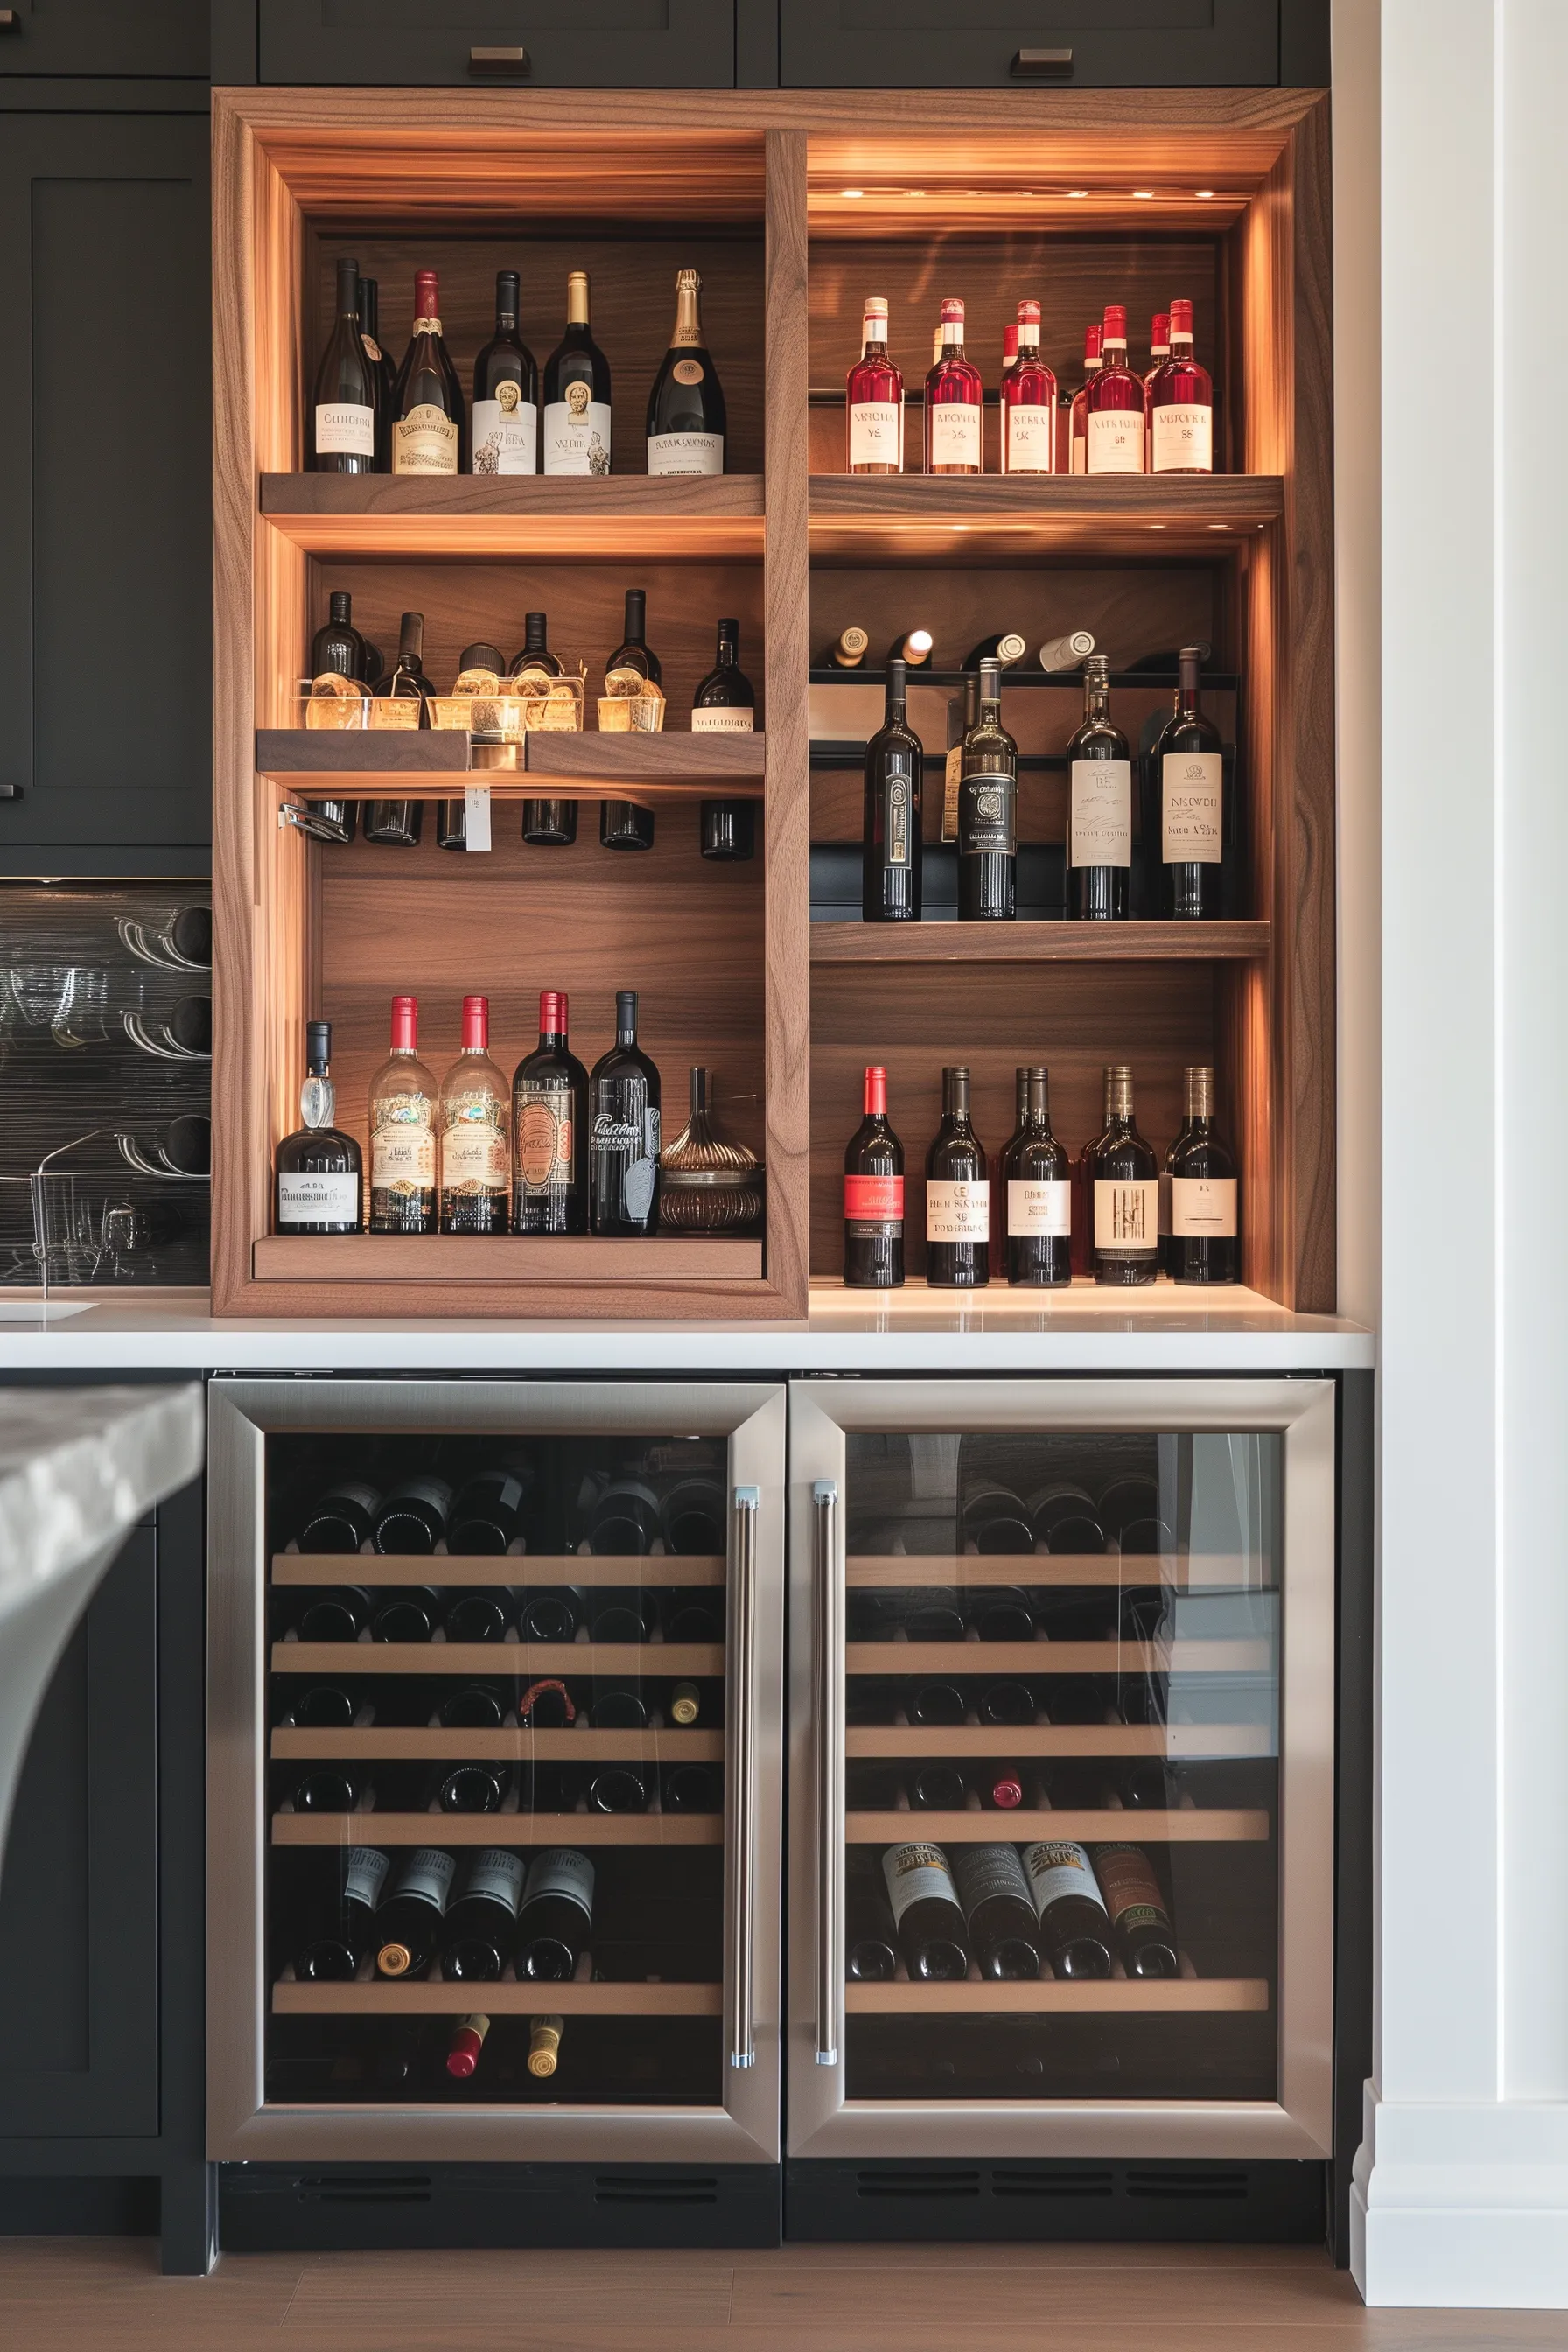 Wooden bar shelves with a built in wine refridgerator